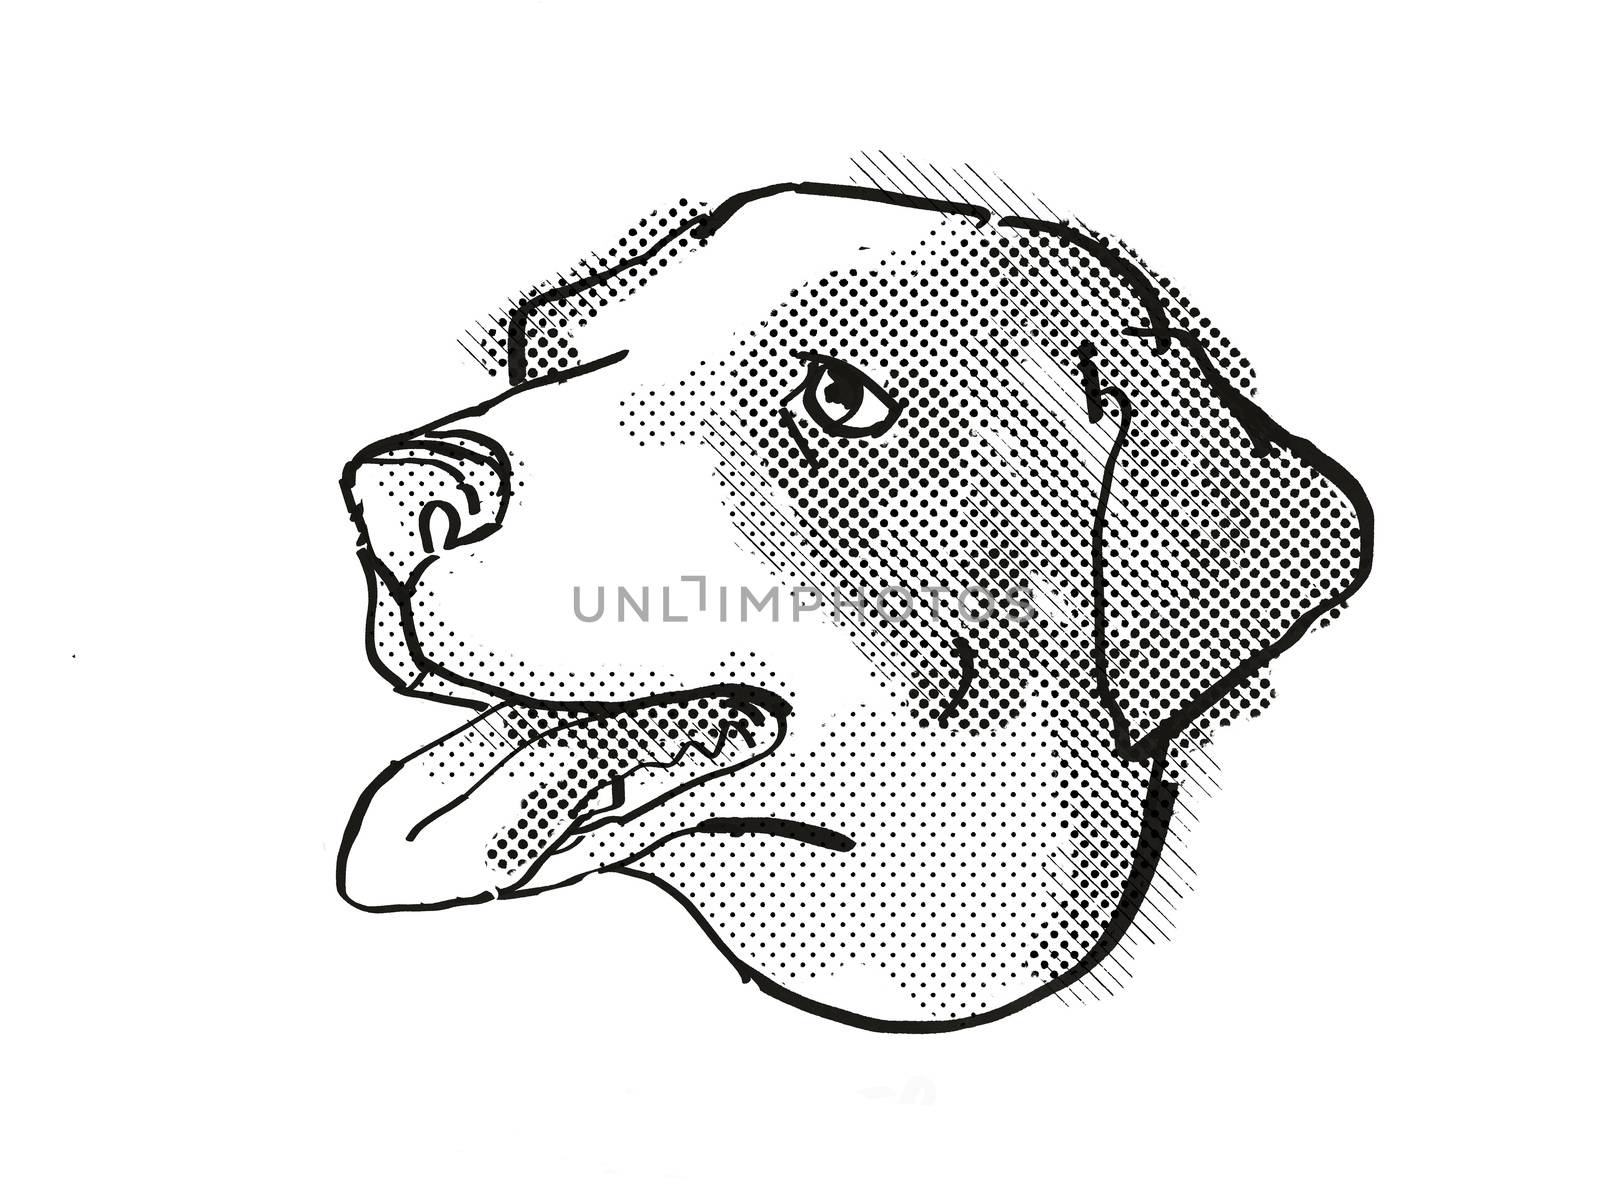 Appenzeller Sennenhunde Dog Breed Cartoon Retro Drawing by patrimonio